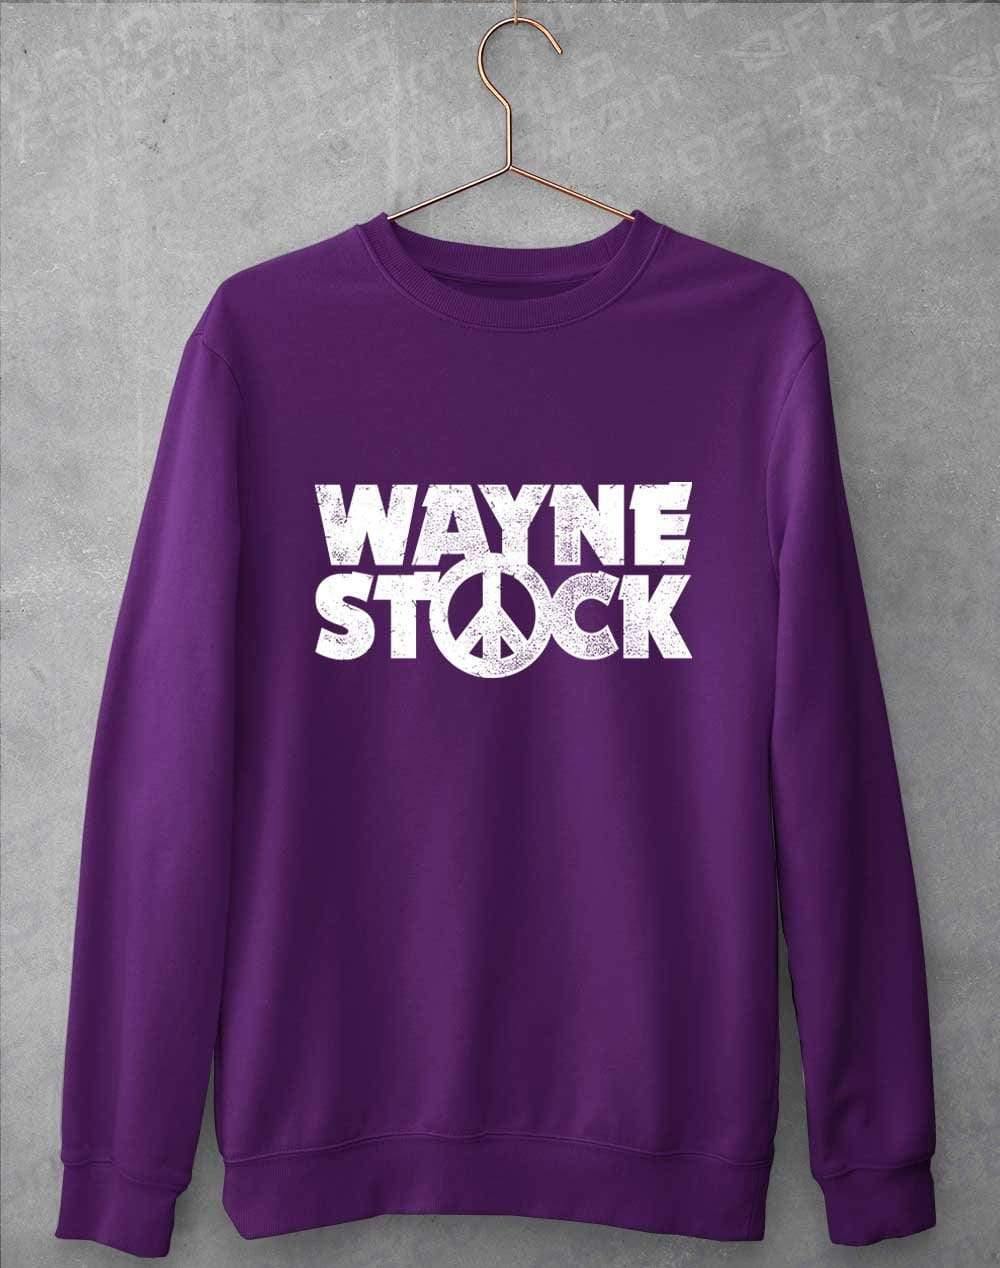 Waynestock Sweatshirt S / Purple  - Off World Tees